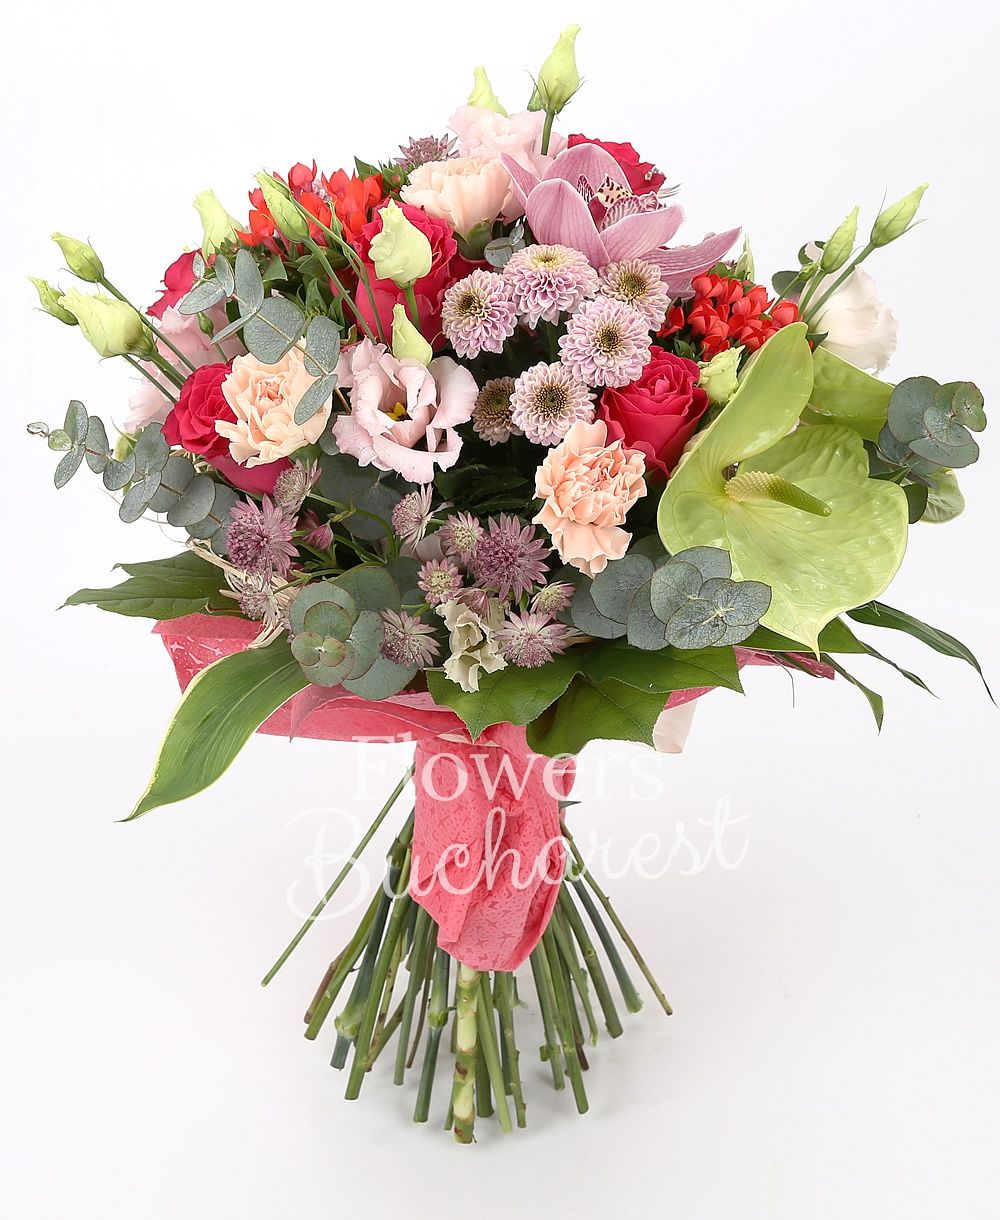 5 cyclam roses, 5 pink santini, 5 red bouvardia, 5 pink lisianthus, 5 pink carnations, garnet cymbidium, 2 green anthurium, greenery